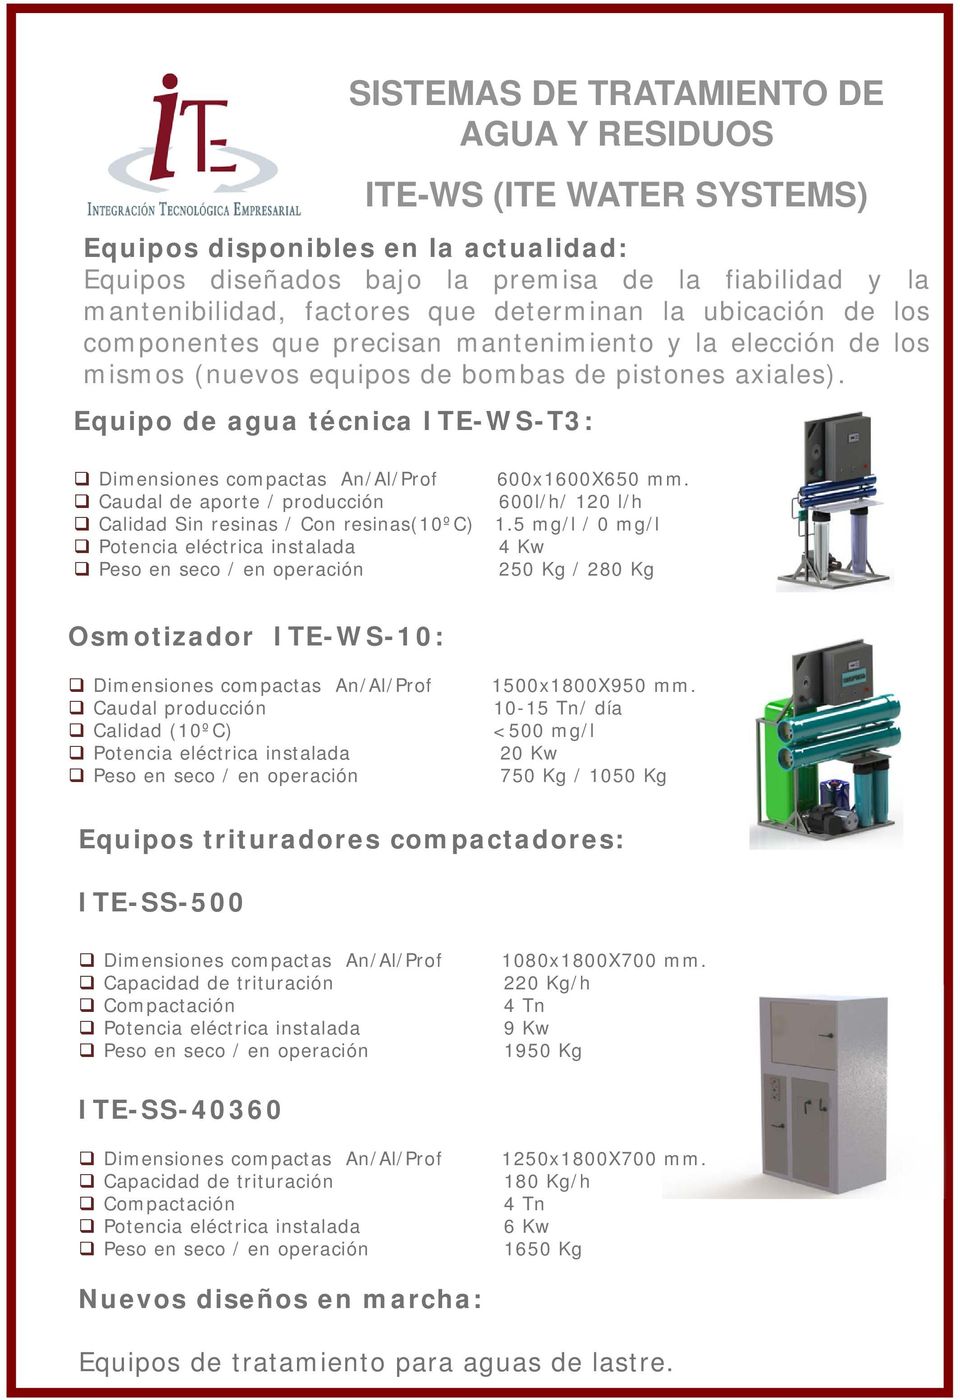 Caudal de aporte / producción 600l/h/ 120 l/h Calidad Sin resinas / Con resinas(10ºc) 1.